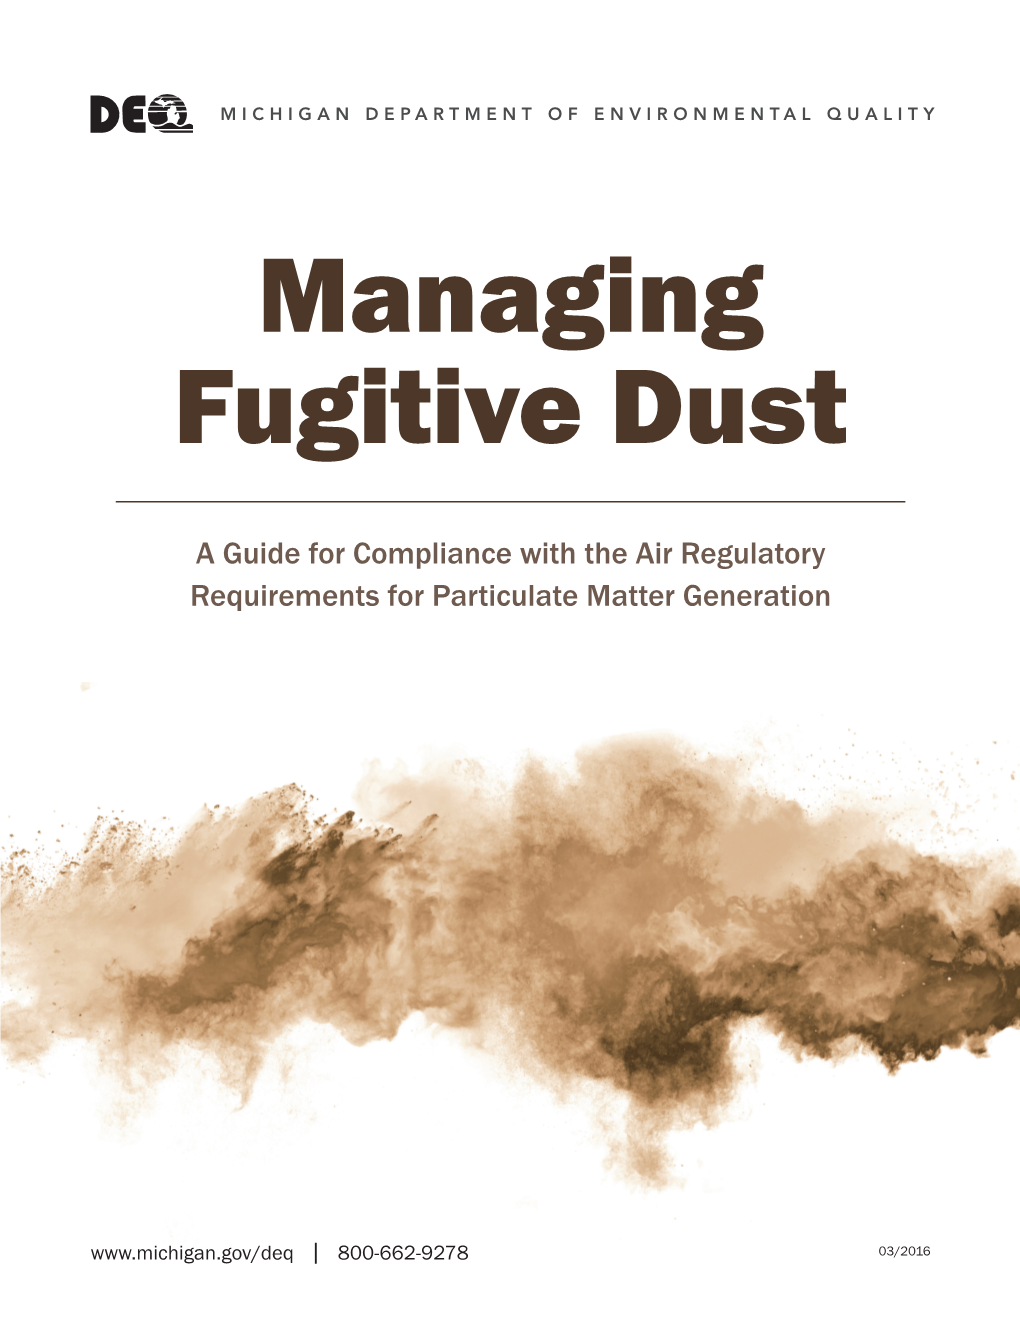 Managing Fugitive Dust